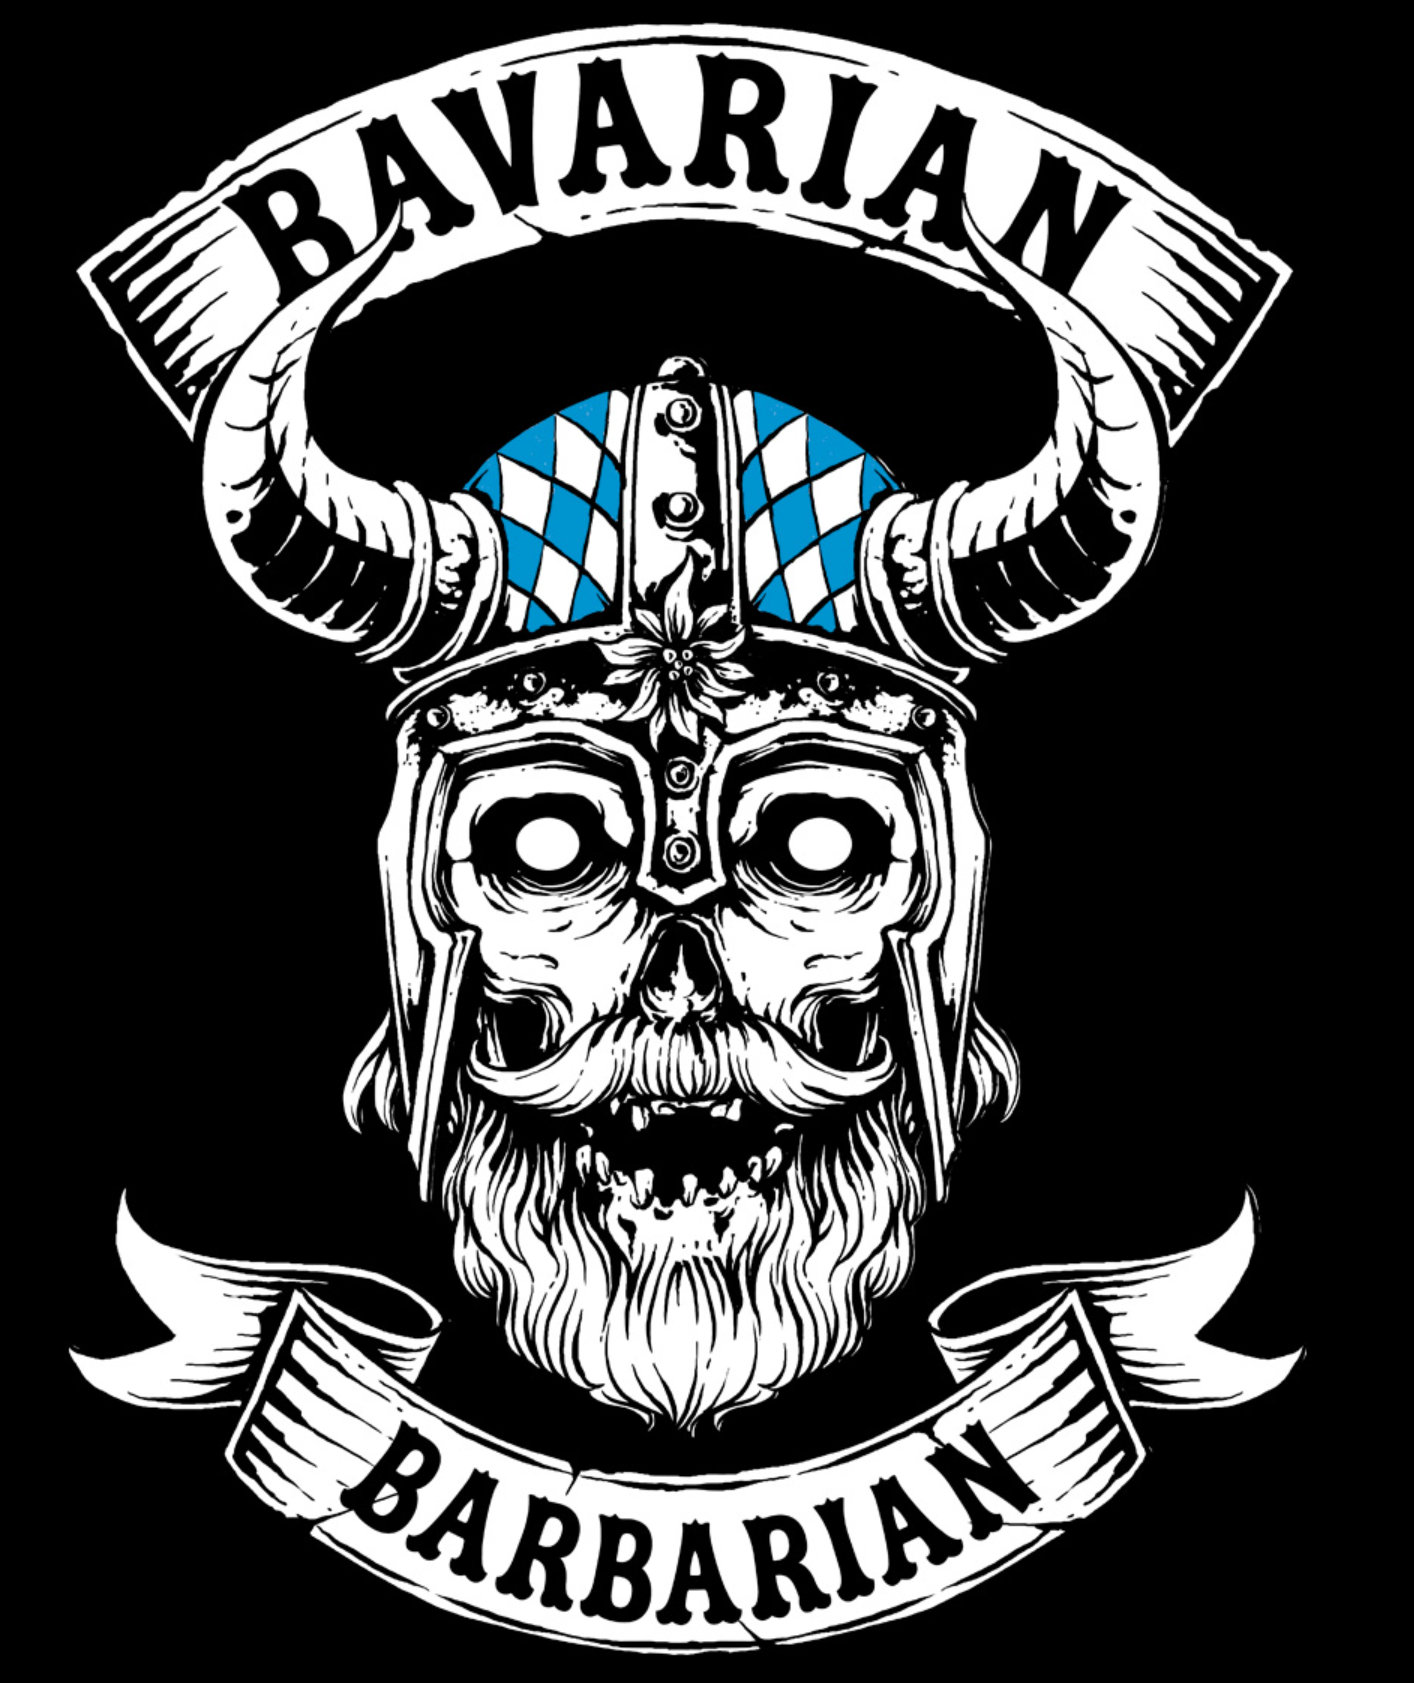 [EU]Bavarian Barbarian - Solo Only - Mini+Scrapheli spawn - 84.191.61.115:28015